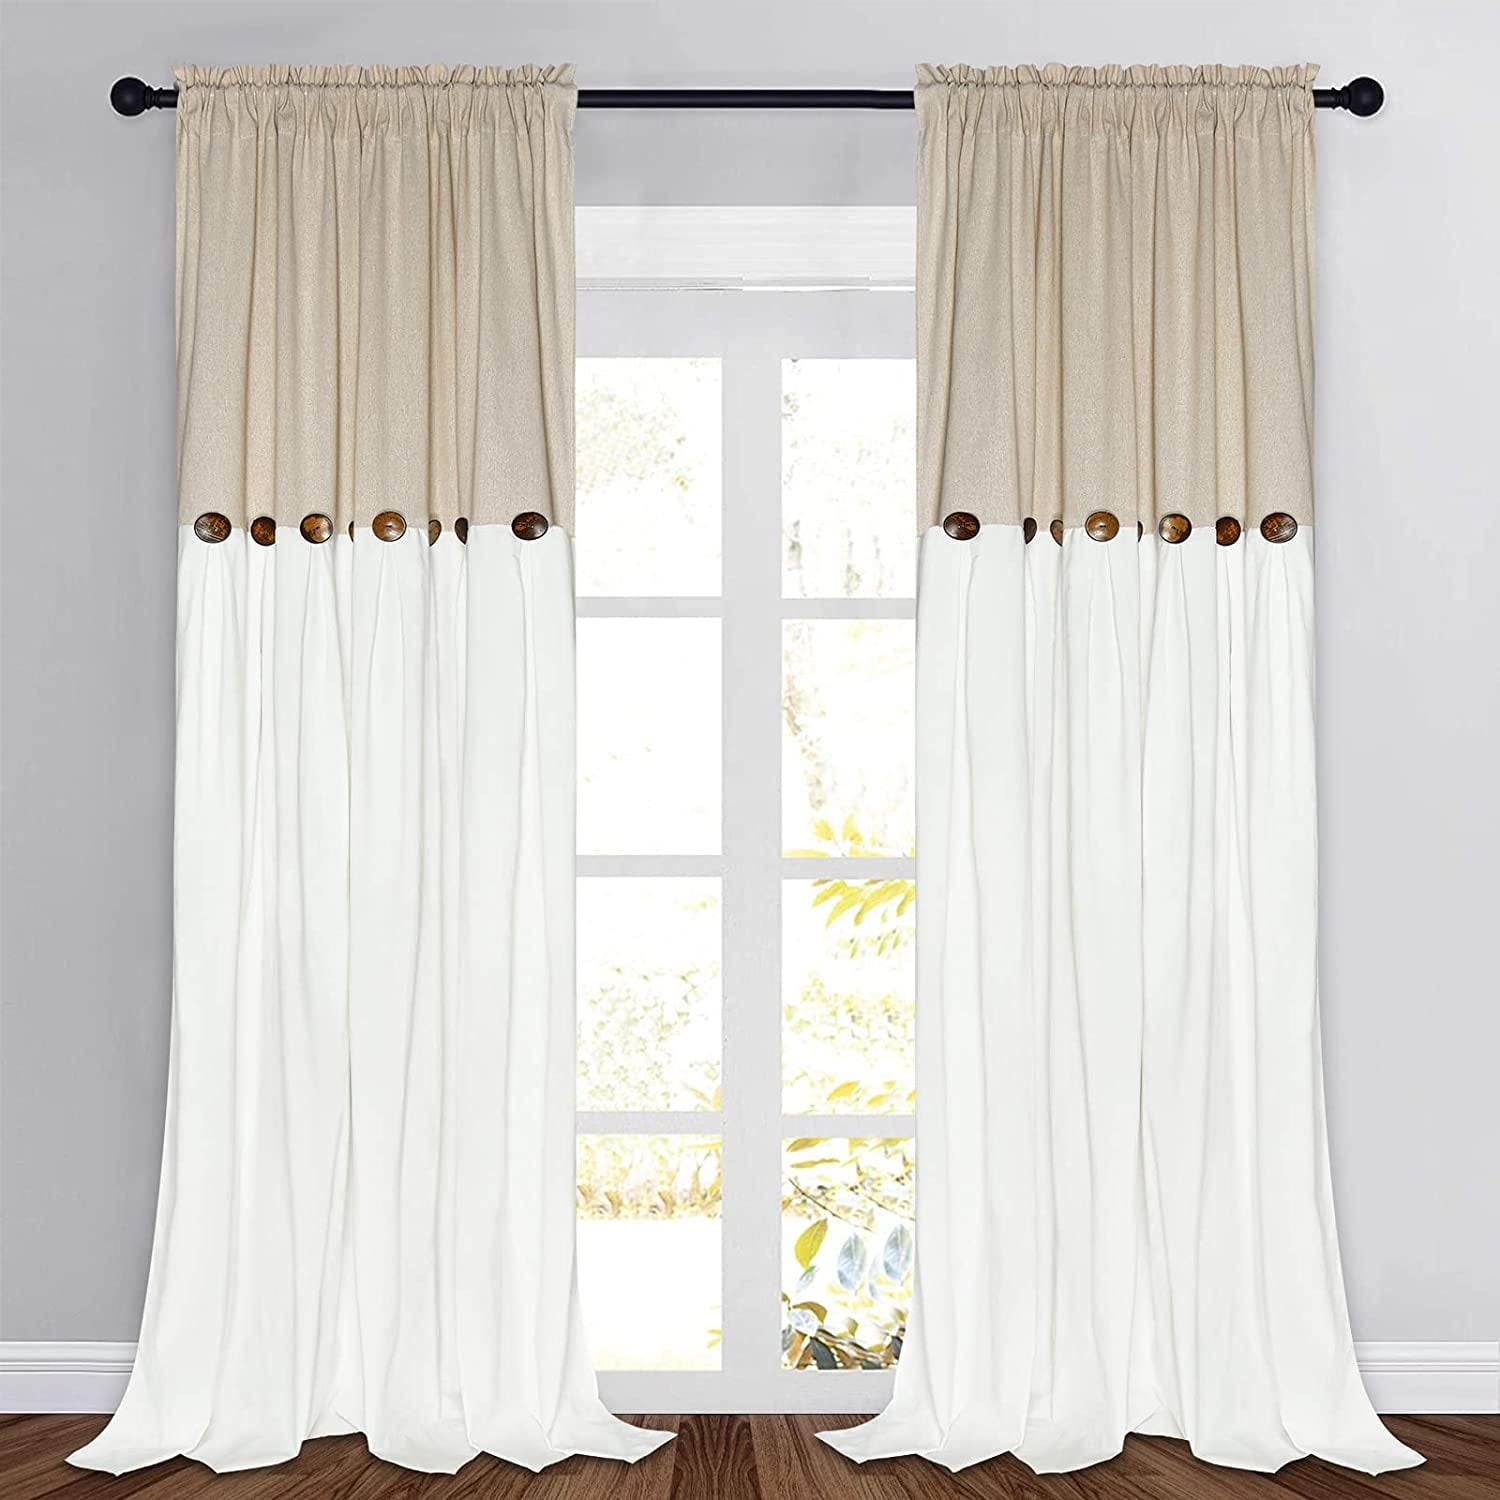 Details about   Moroccan Fashion Room Darkening Rod Pocket Window Curtain 52"x18" Off White/Grey 